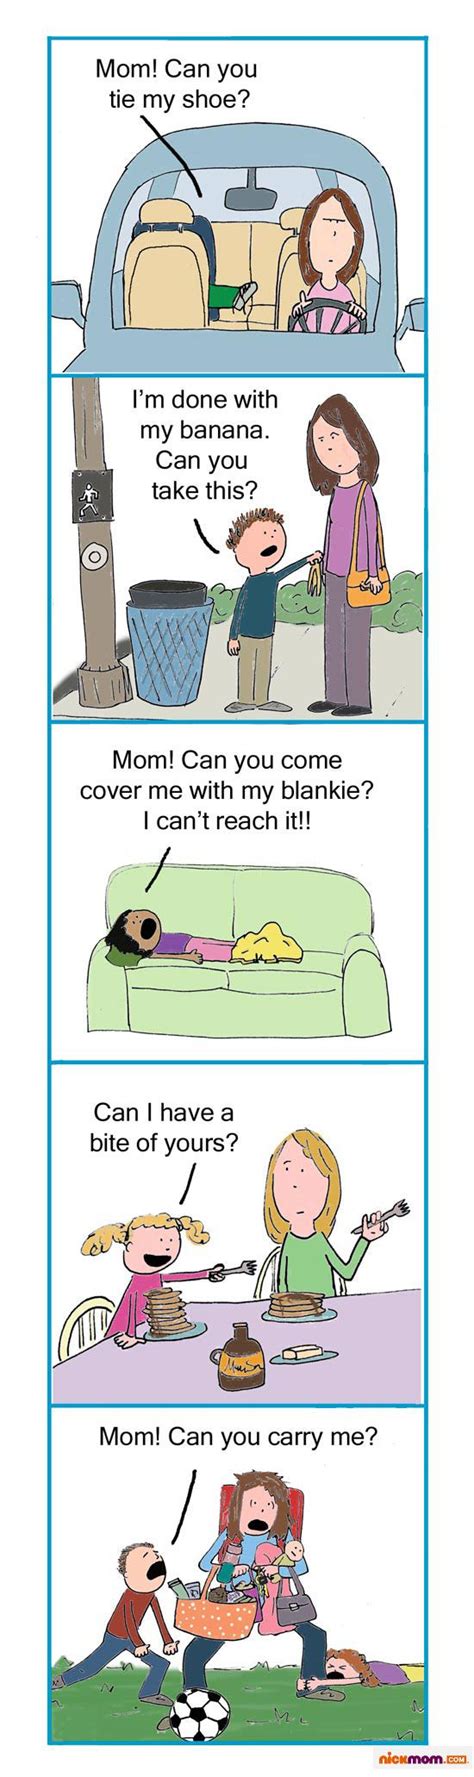 31 best funny mom jokes images on pinterest funny stuff ha ha and